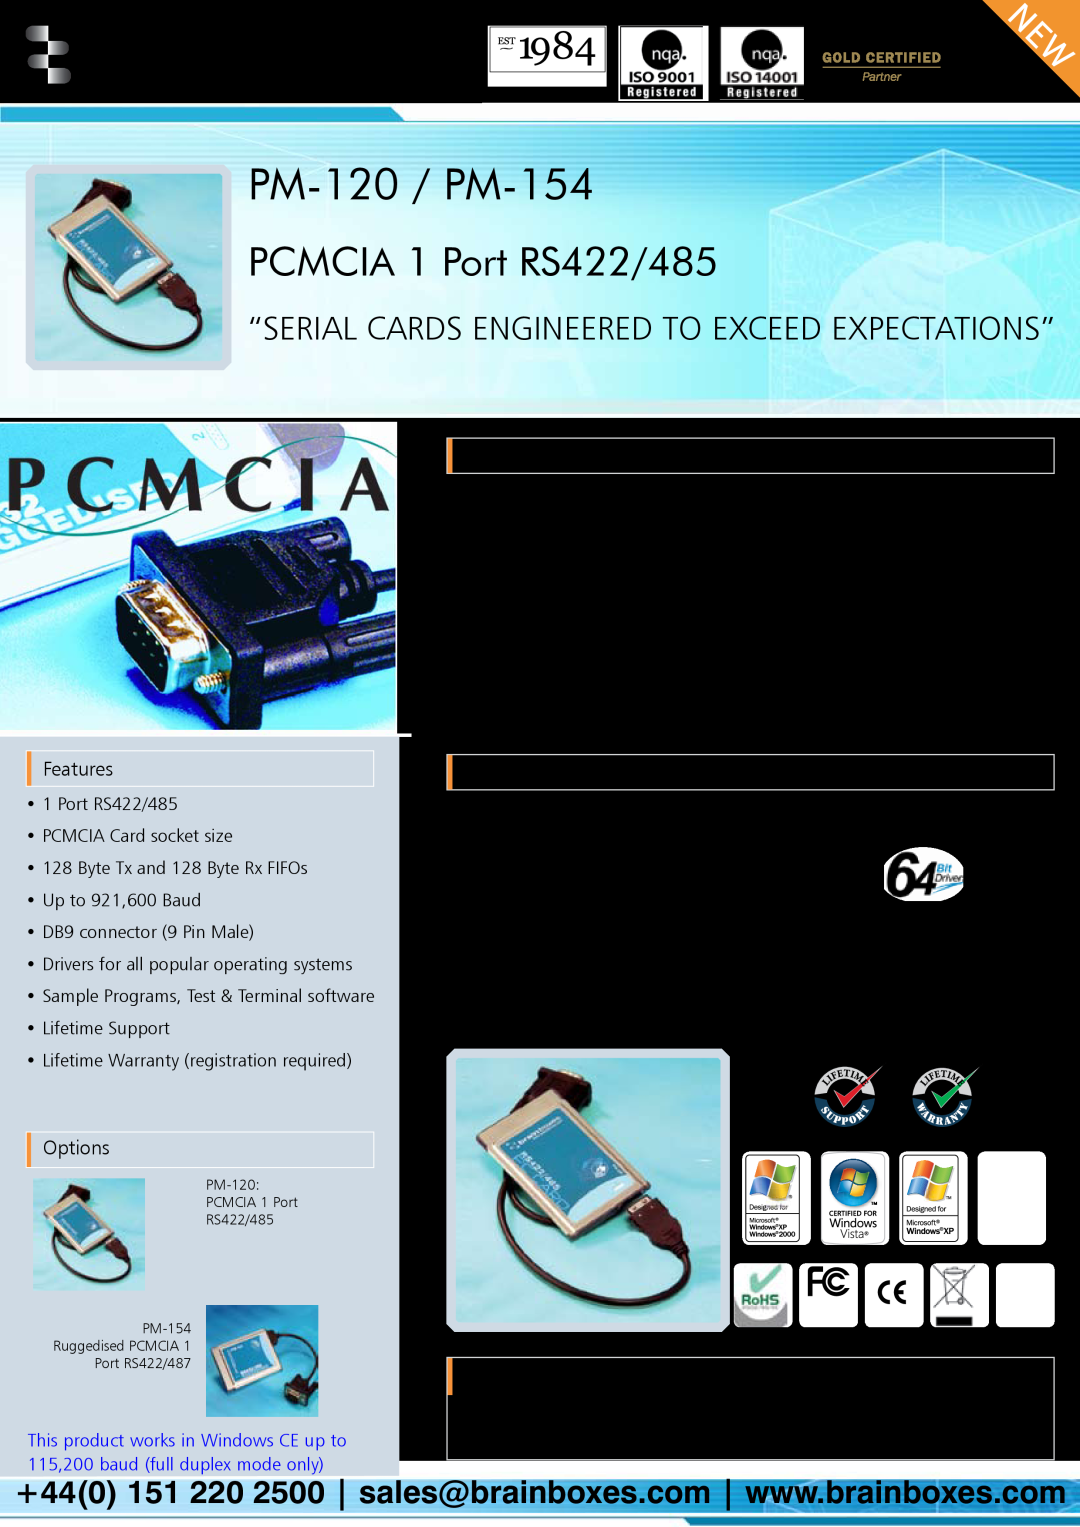 Brainboxes warranty PCMCIA 1 Port RS422/485, brainboxes, PM-120 / PM-154 